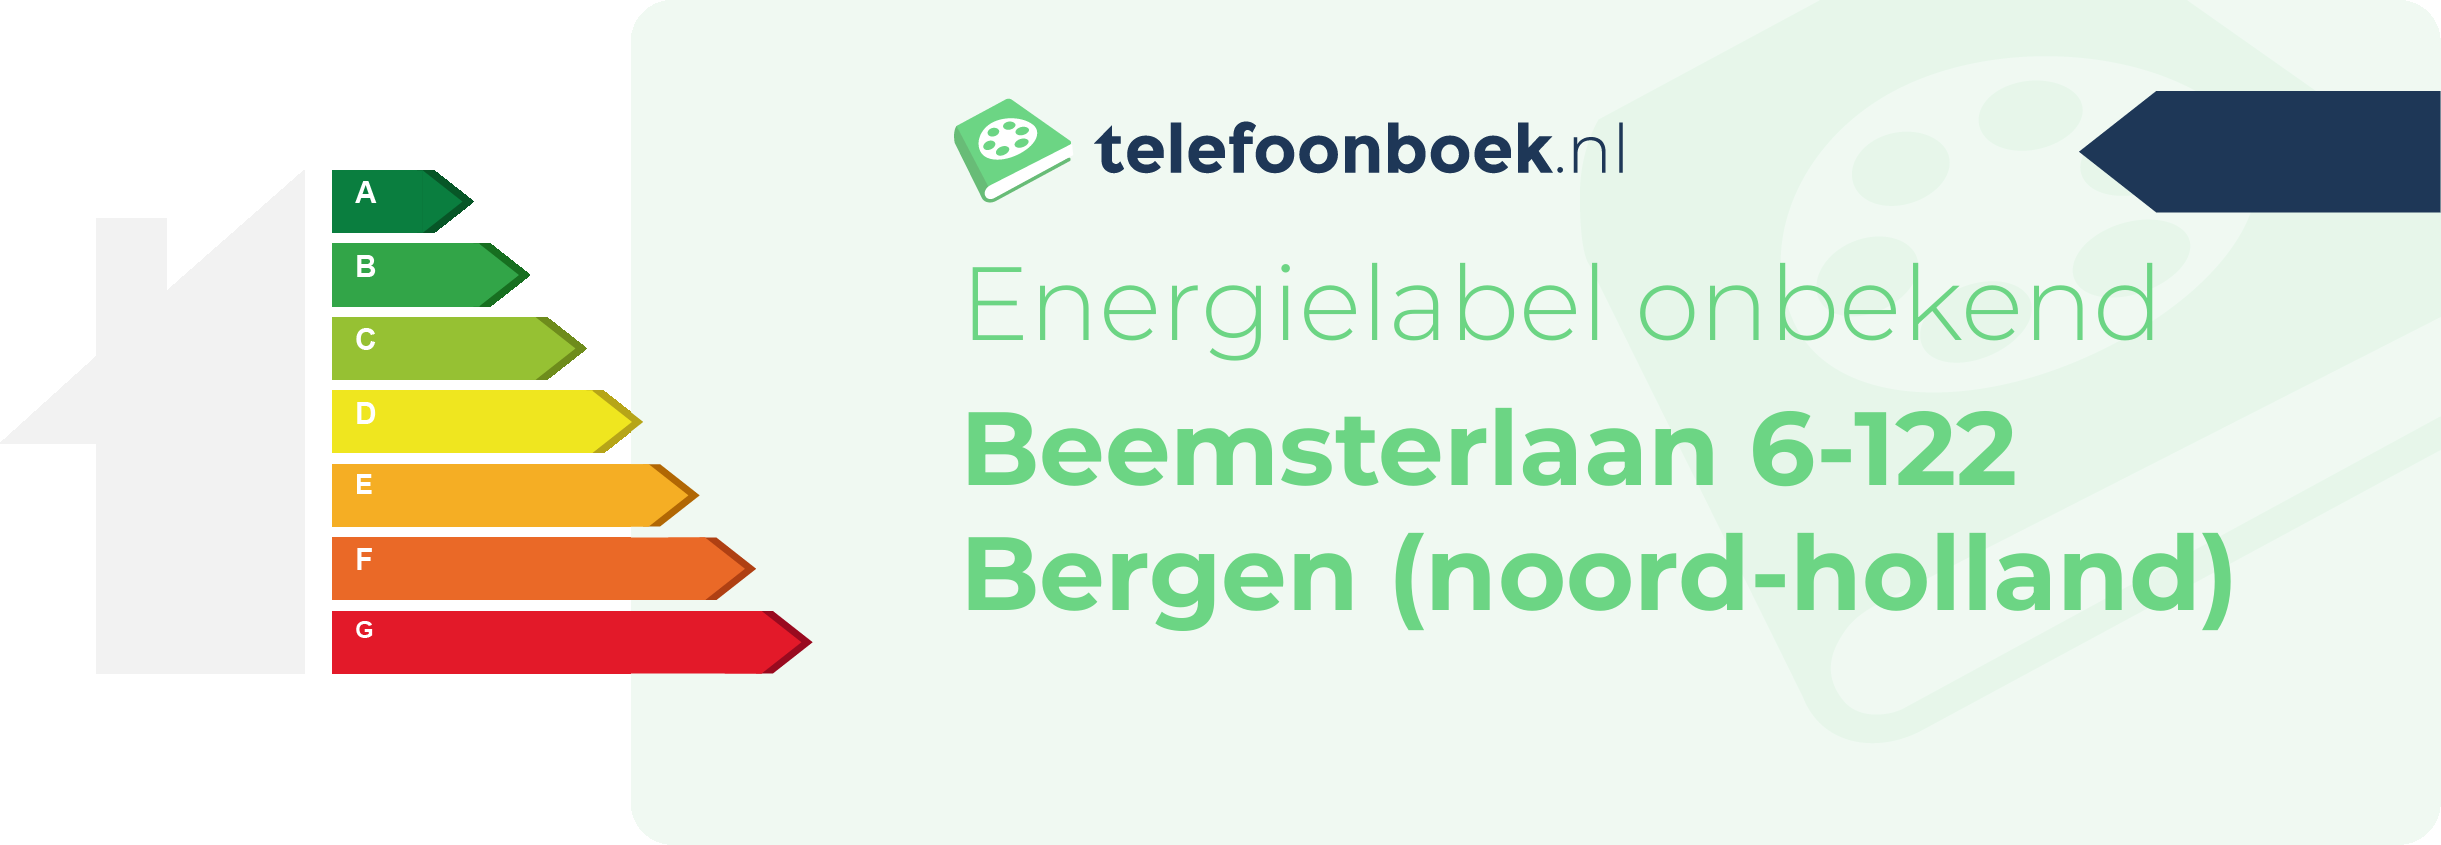 Energielabel Beemsterlaan 6-122 Bergen (Noord-Holland)